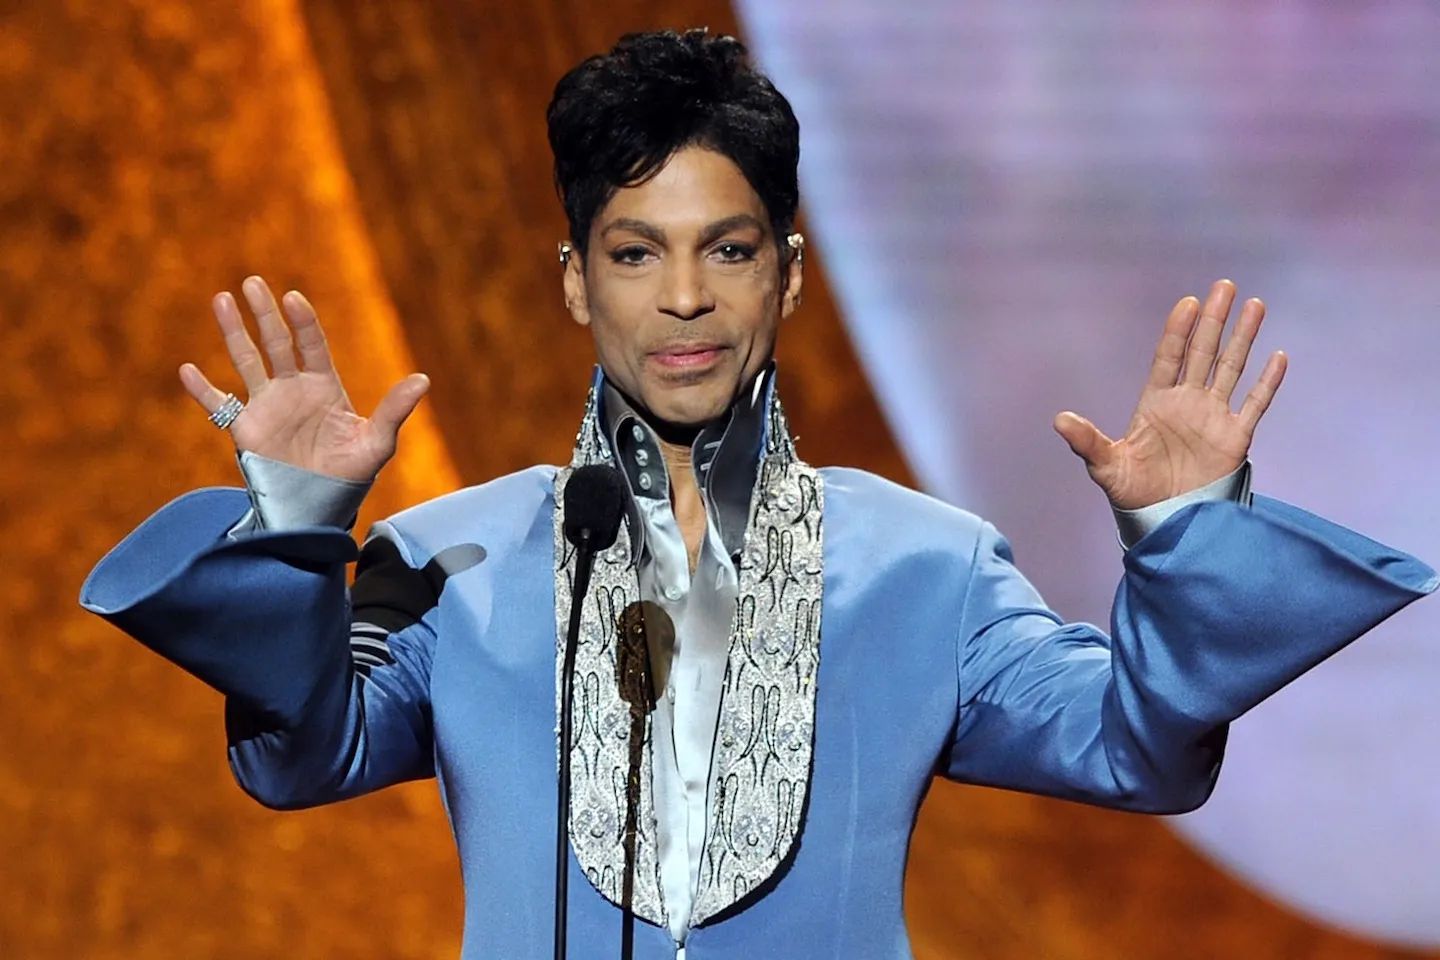 Prince - $200 Million Net Worth, His Royal Badness The Artist